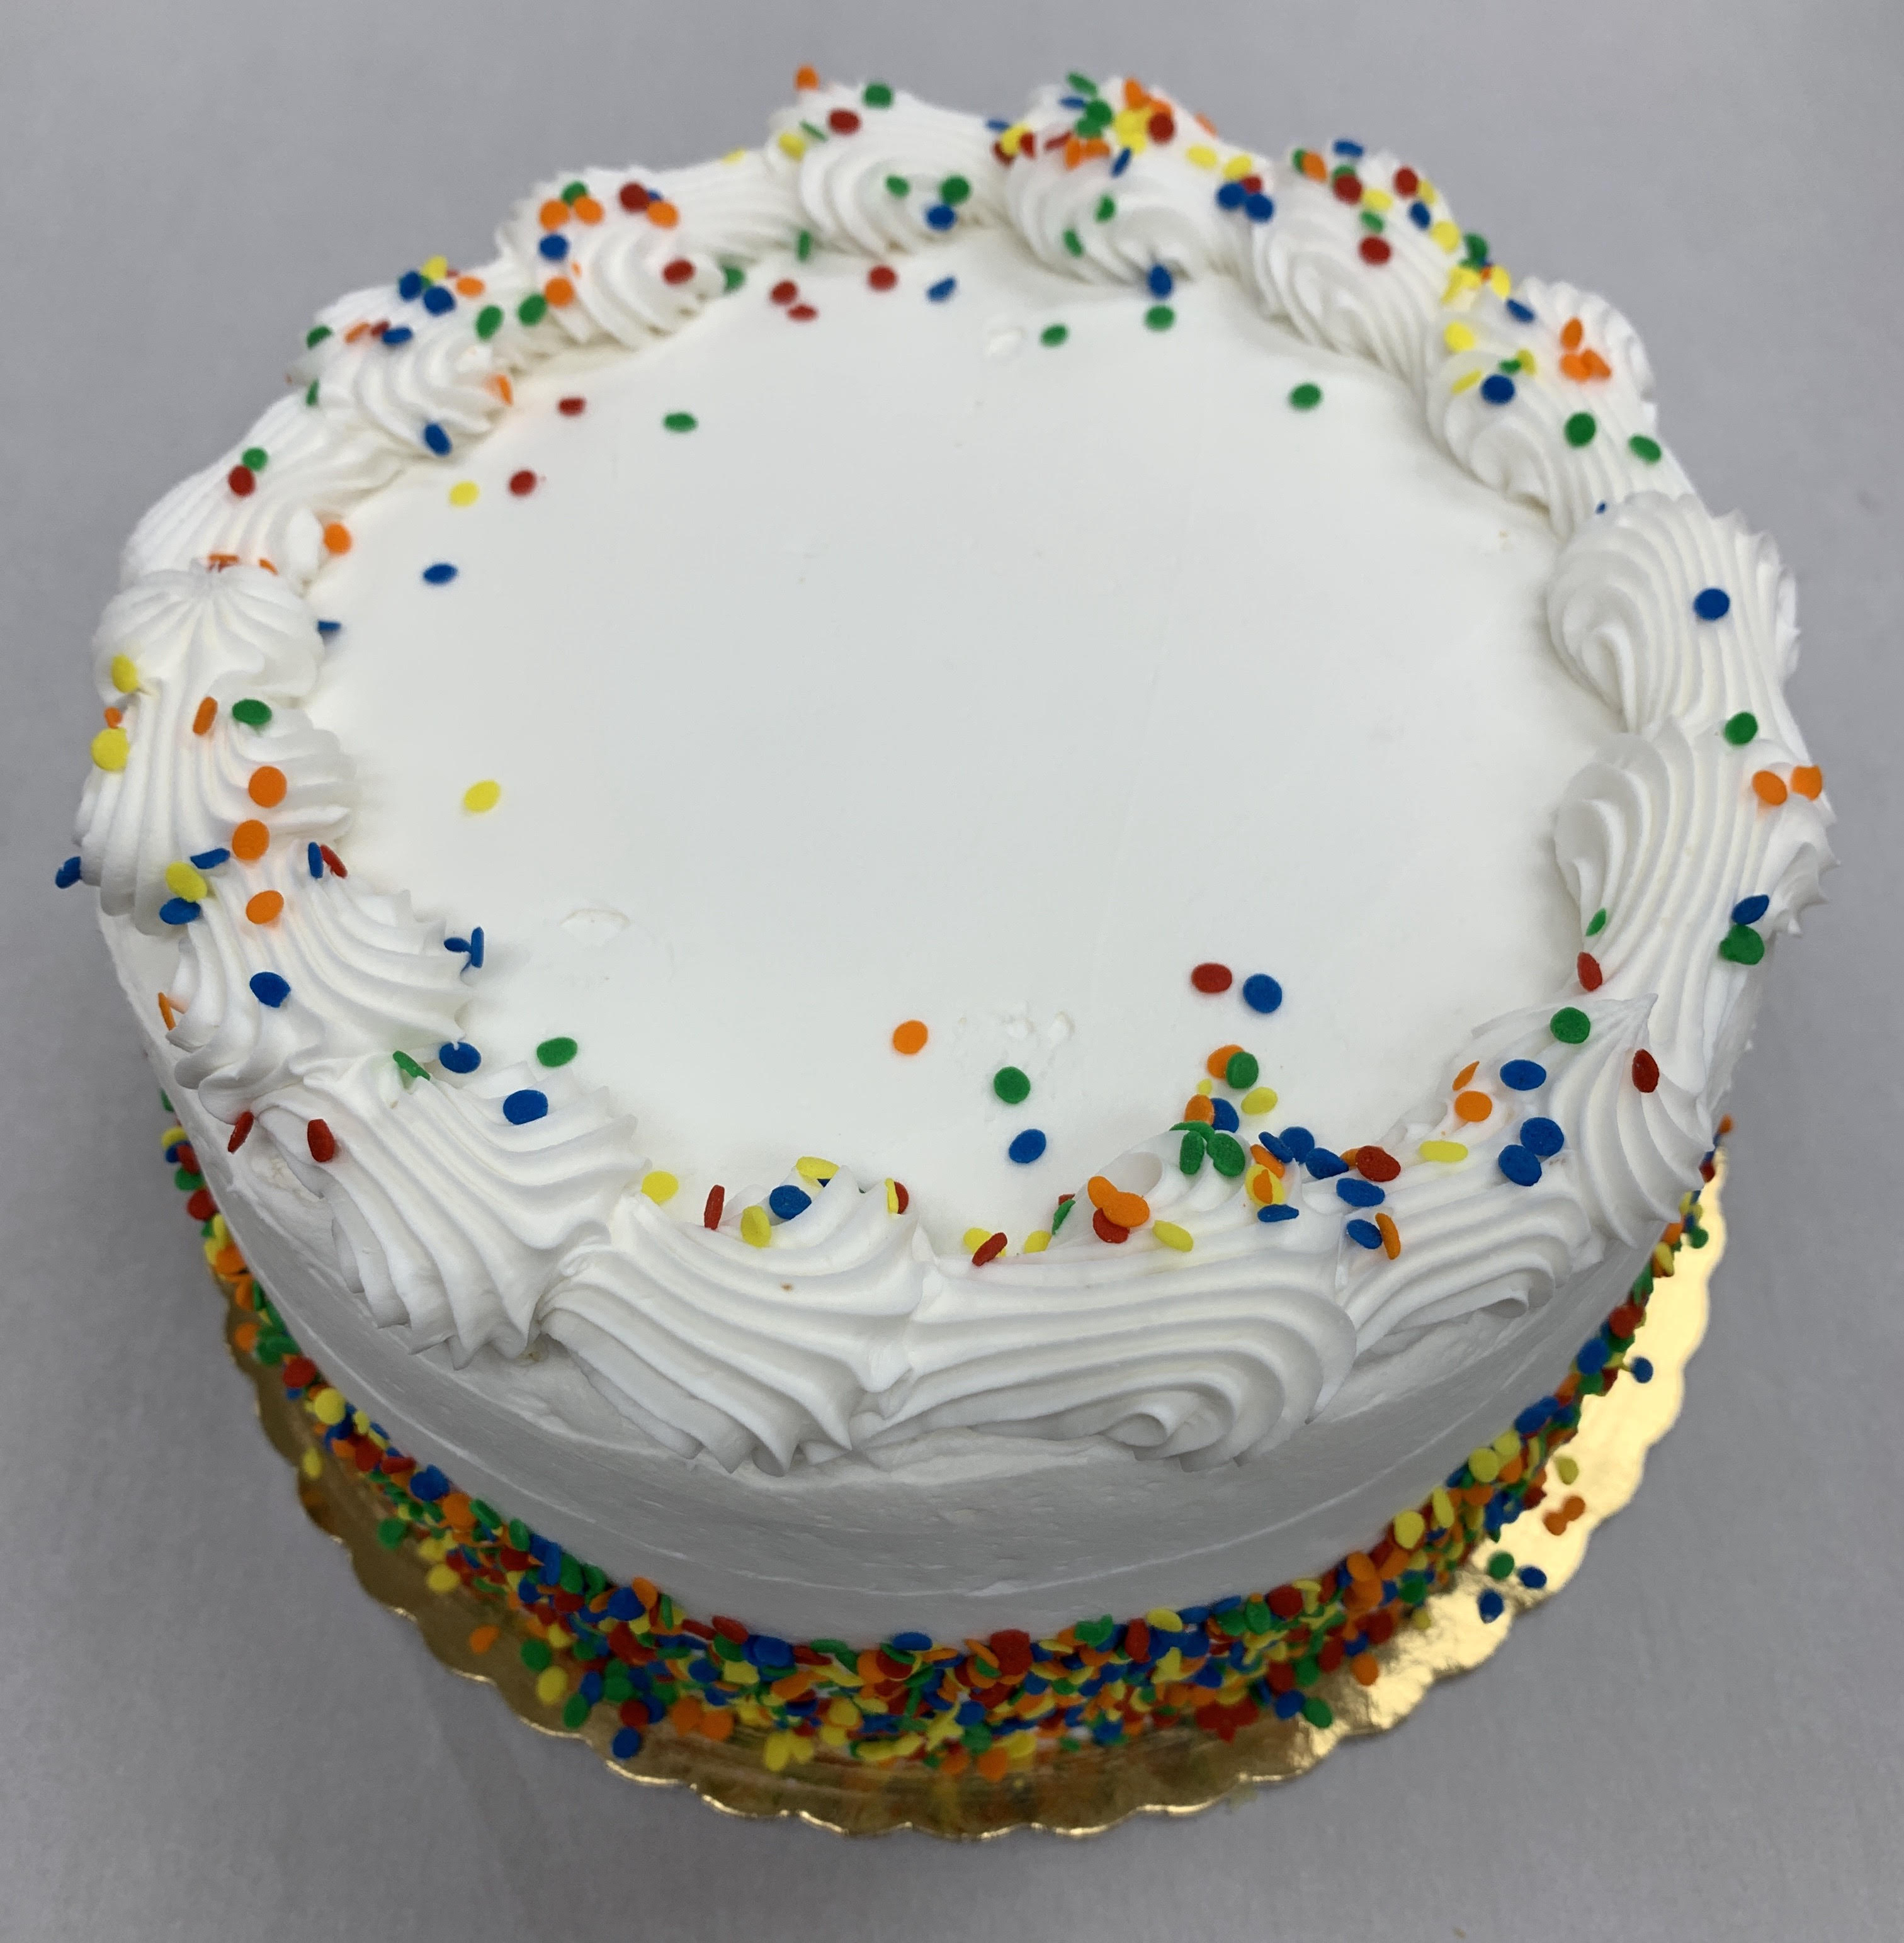 Corropolese 7” Vanilla Birthday Cake